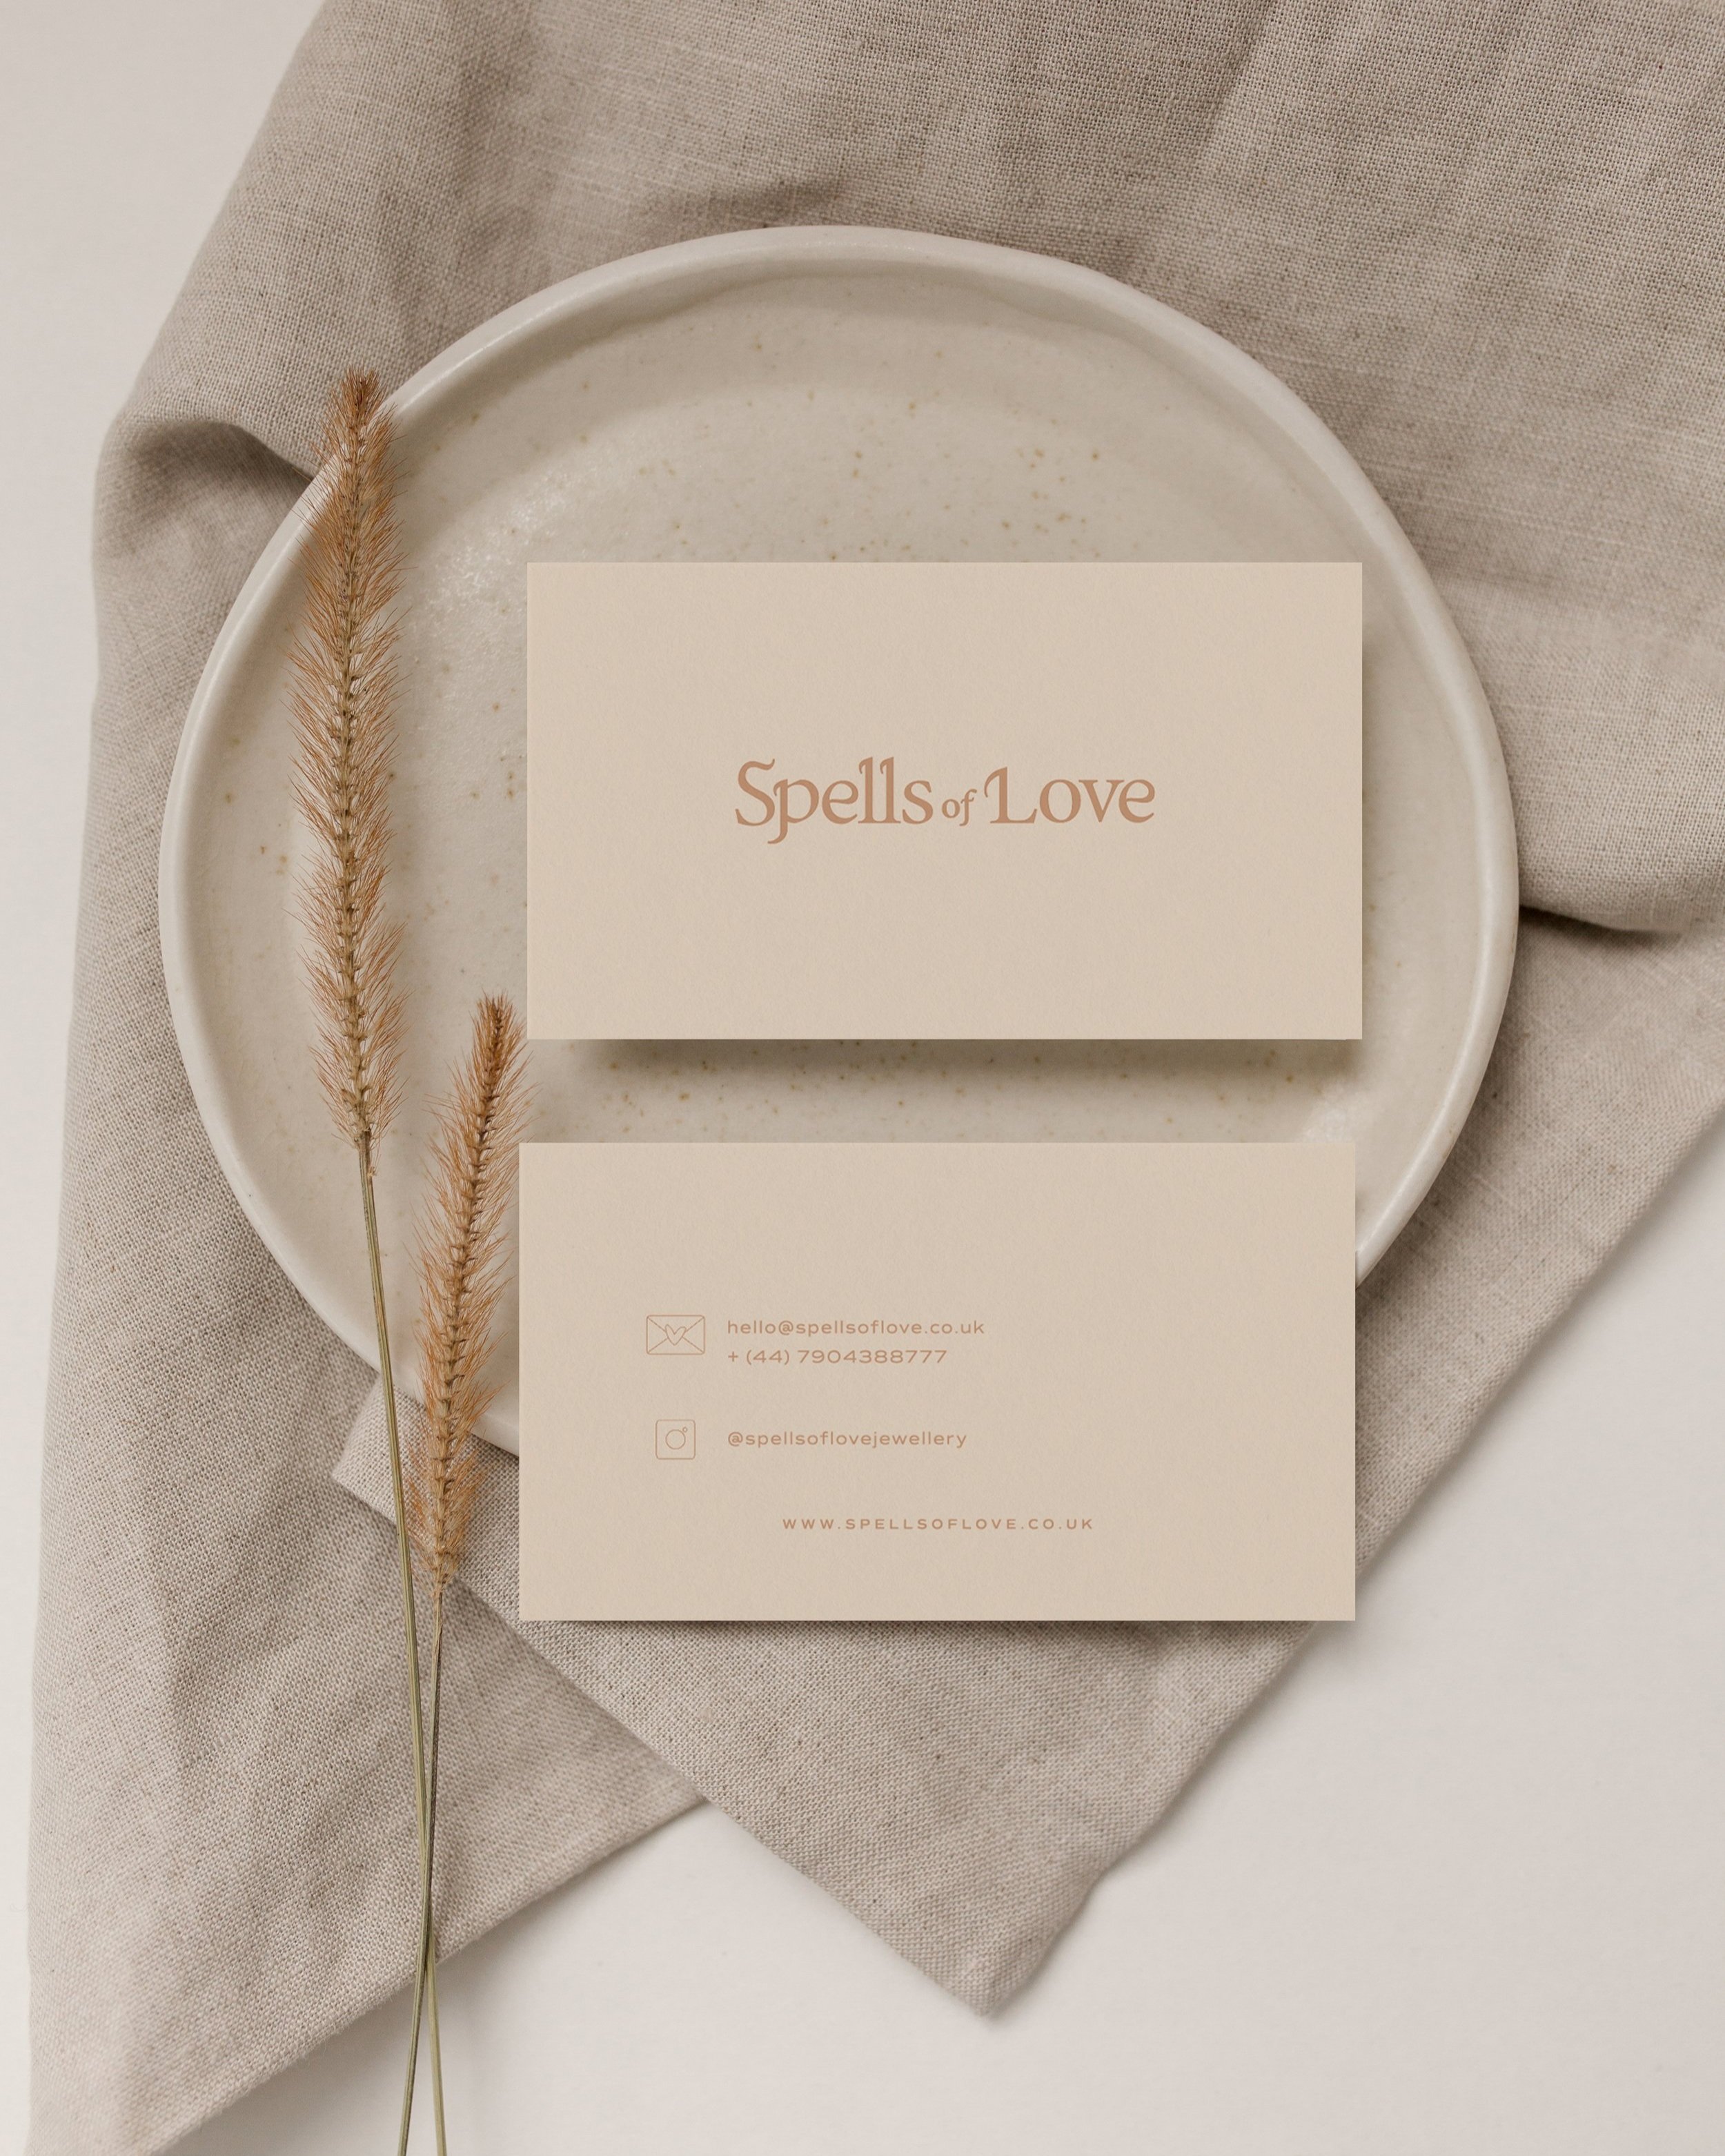 Spells of Love Business Card Design